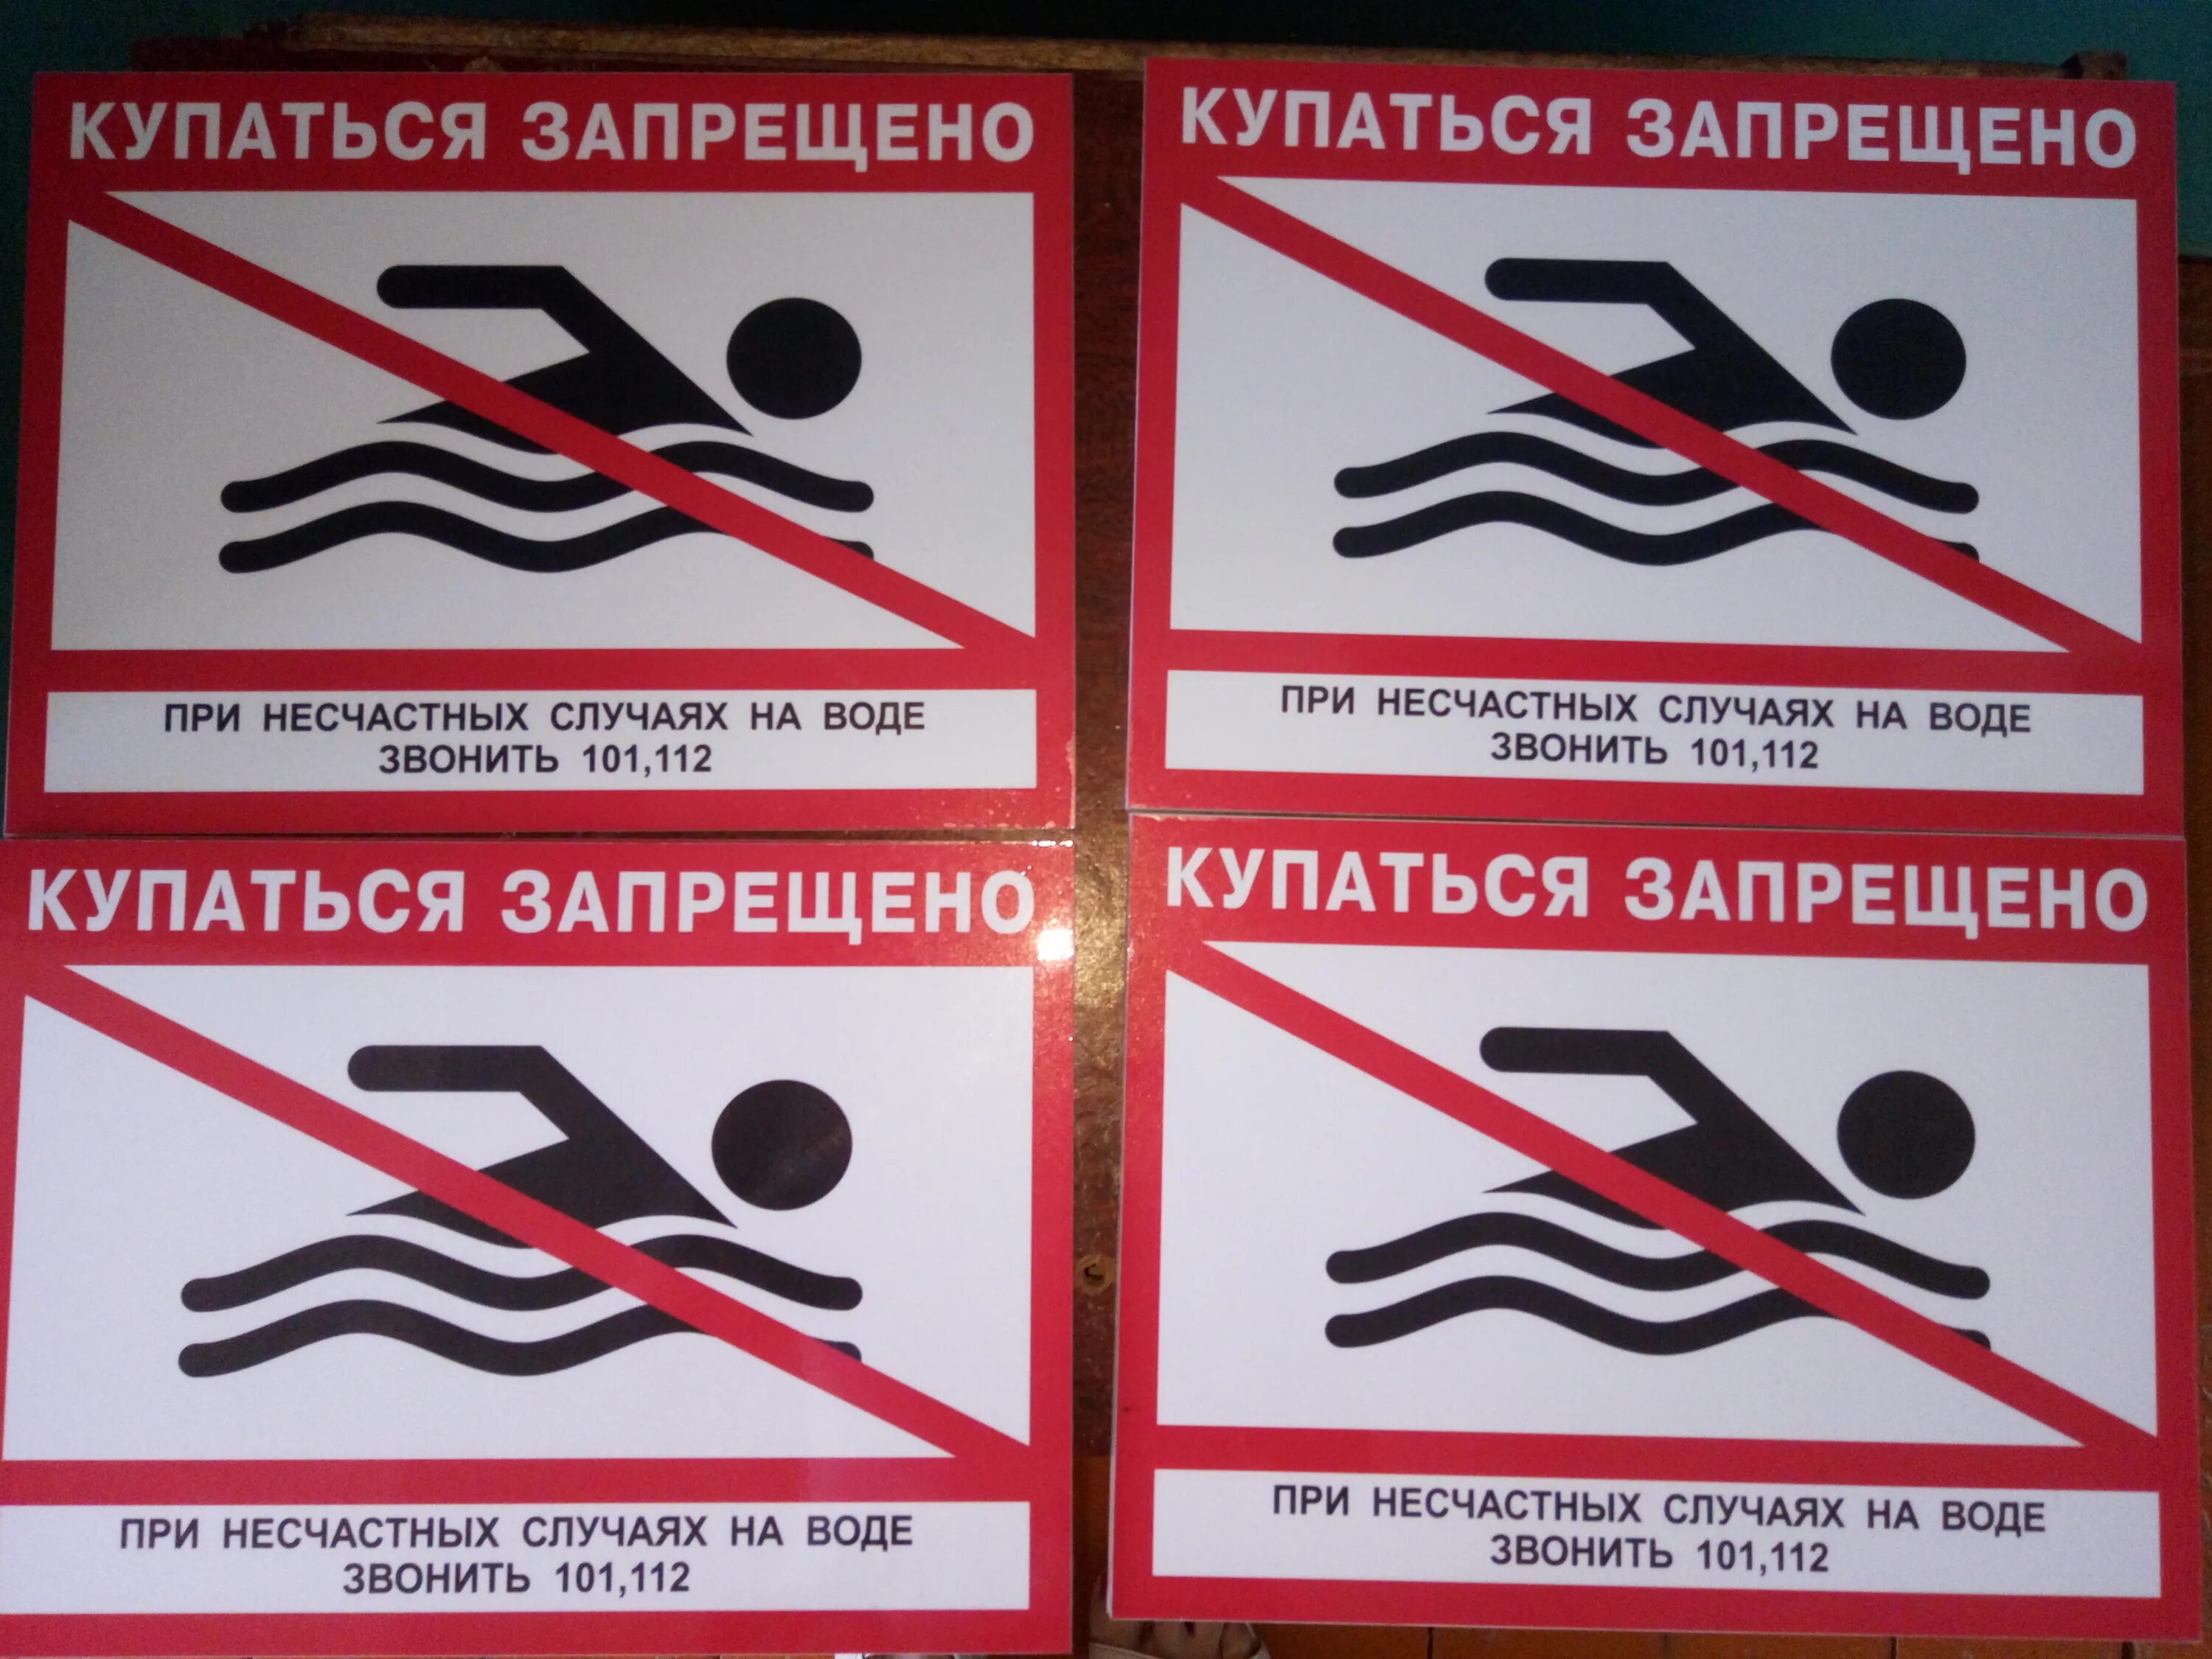 Купаться запрещено картинки. Купание запрещено табличка. Знак «купаться запрещено». Знаккураться запрещено. Плакат купание запрещено.